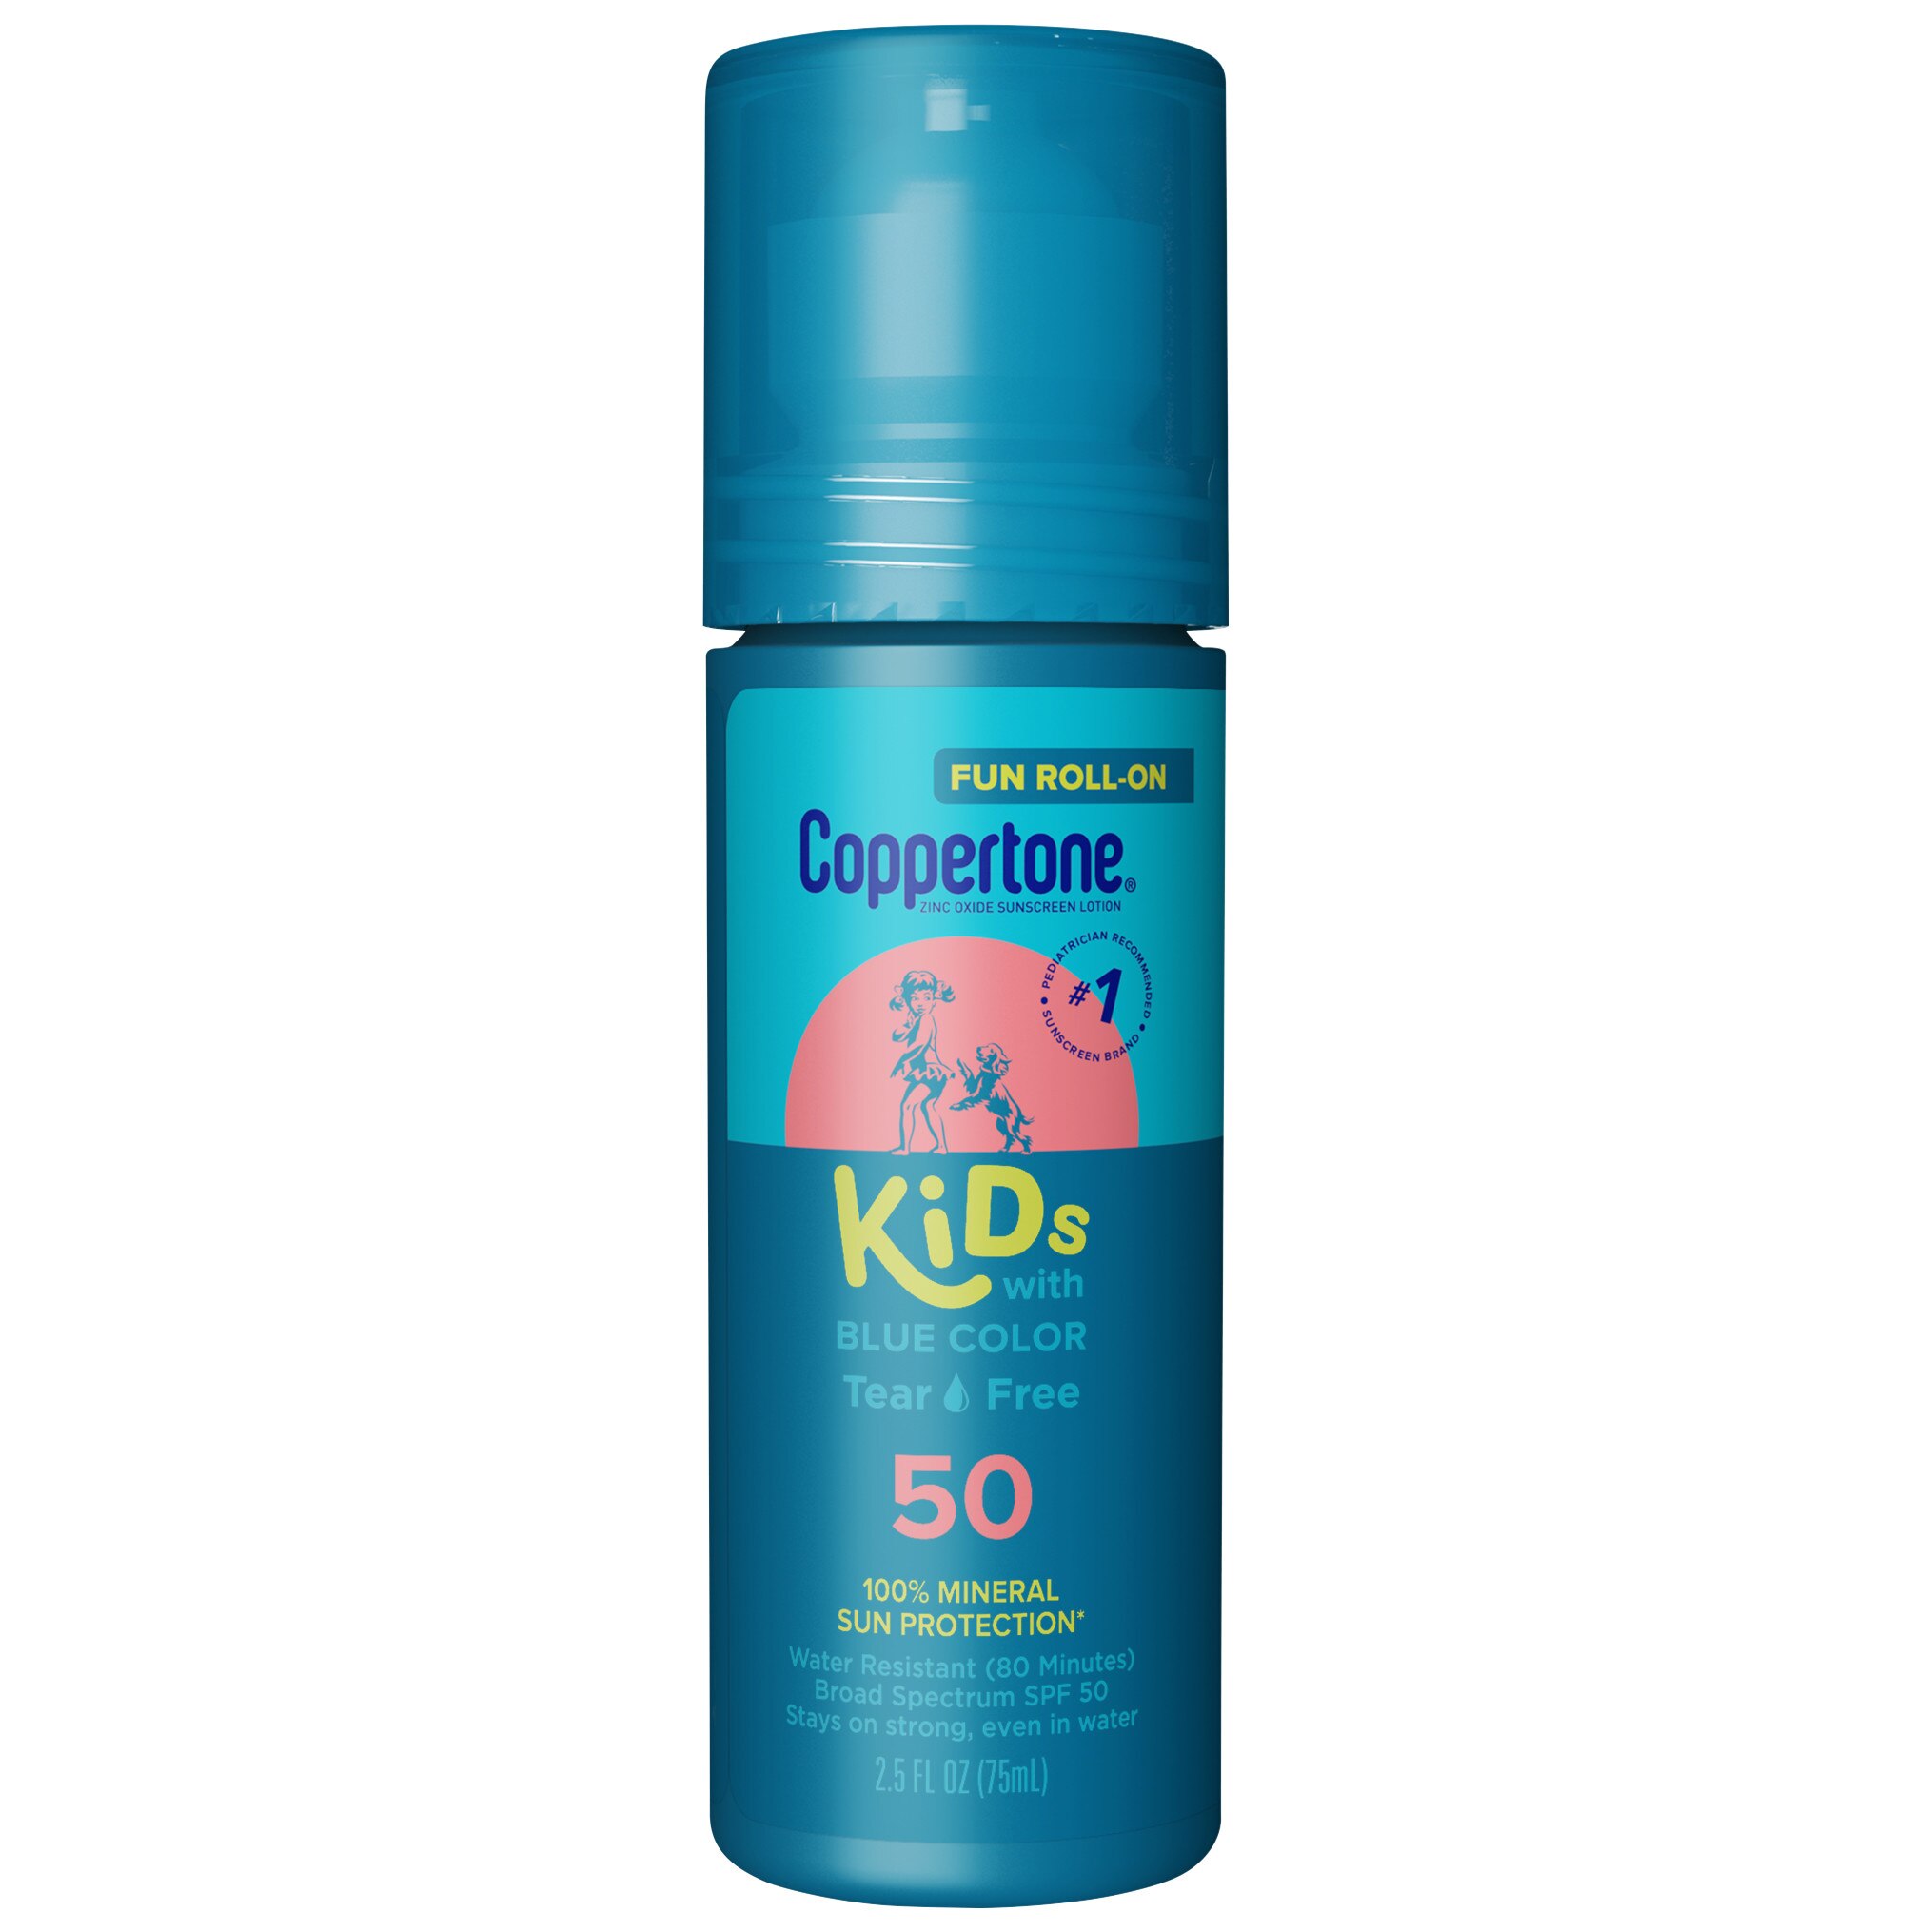 Coppertone Kids Fun Color Roll-On Sunscreen, Blue, SPF 50, 2.5 oz